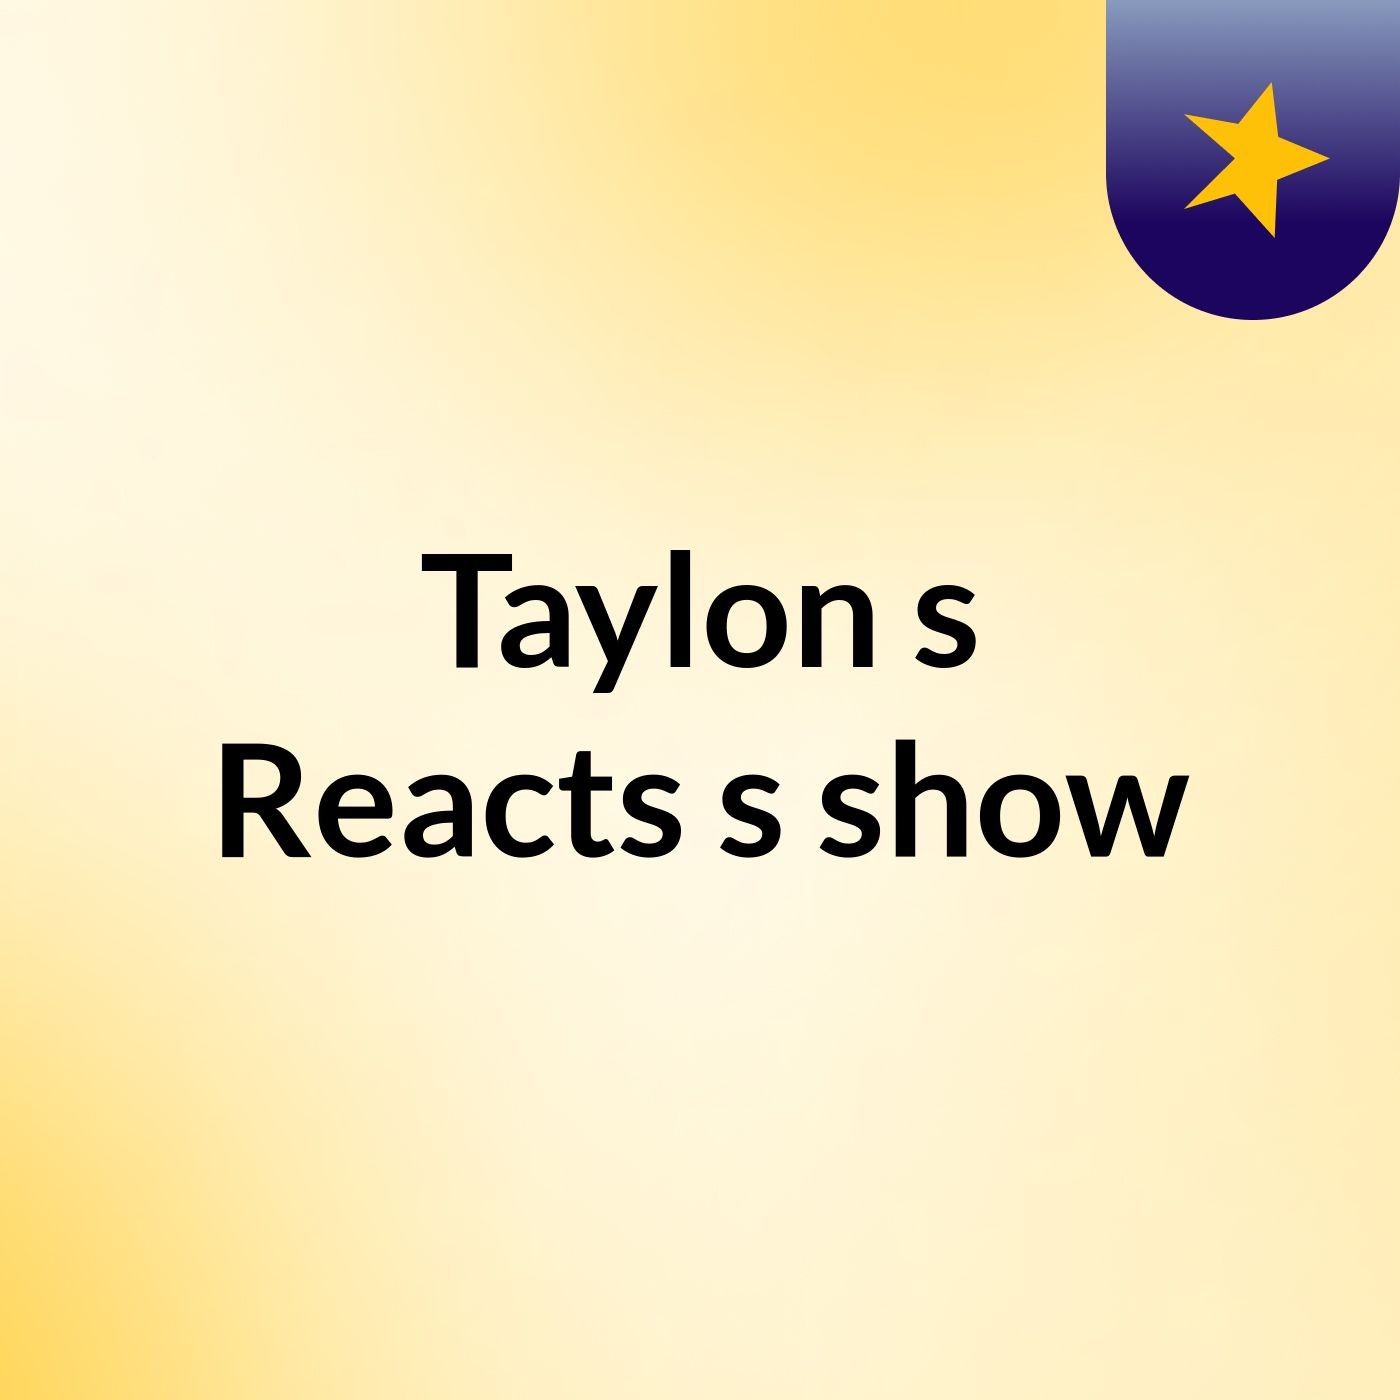 Taylon's Reacts's show